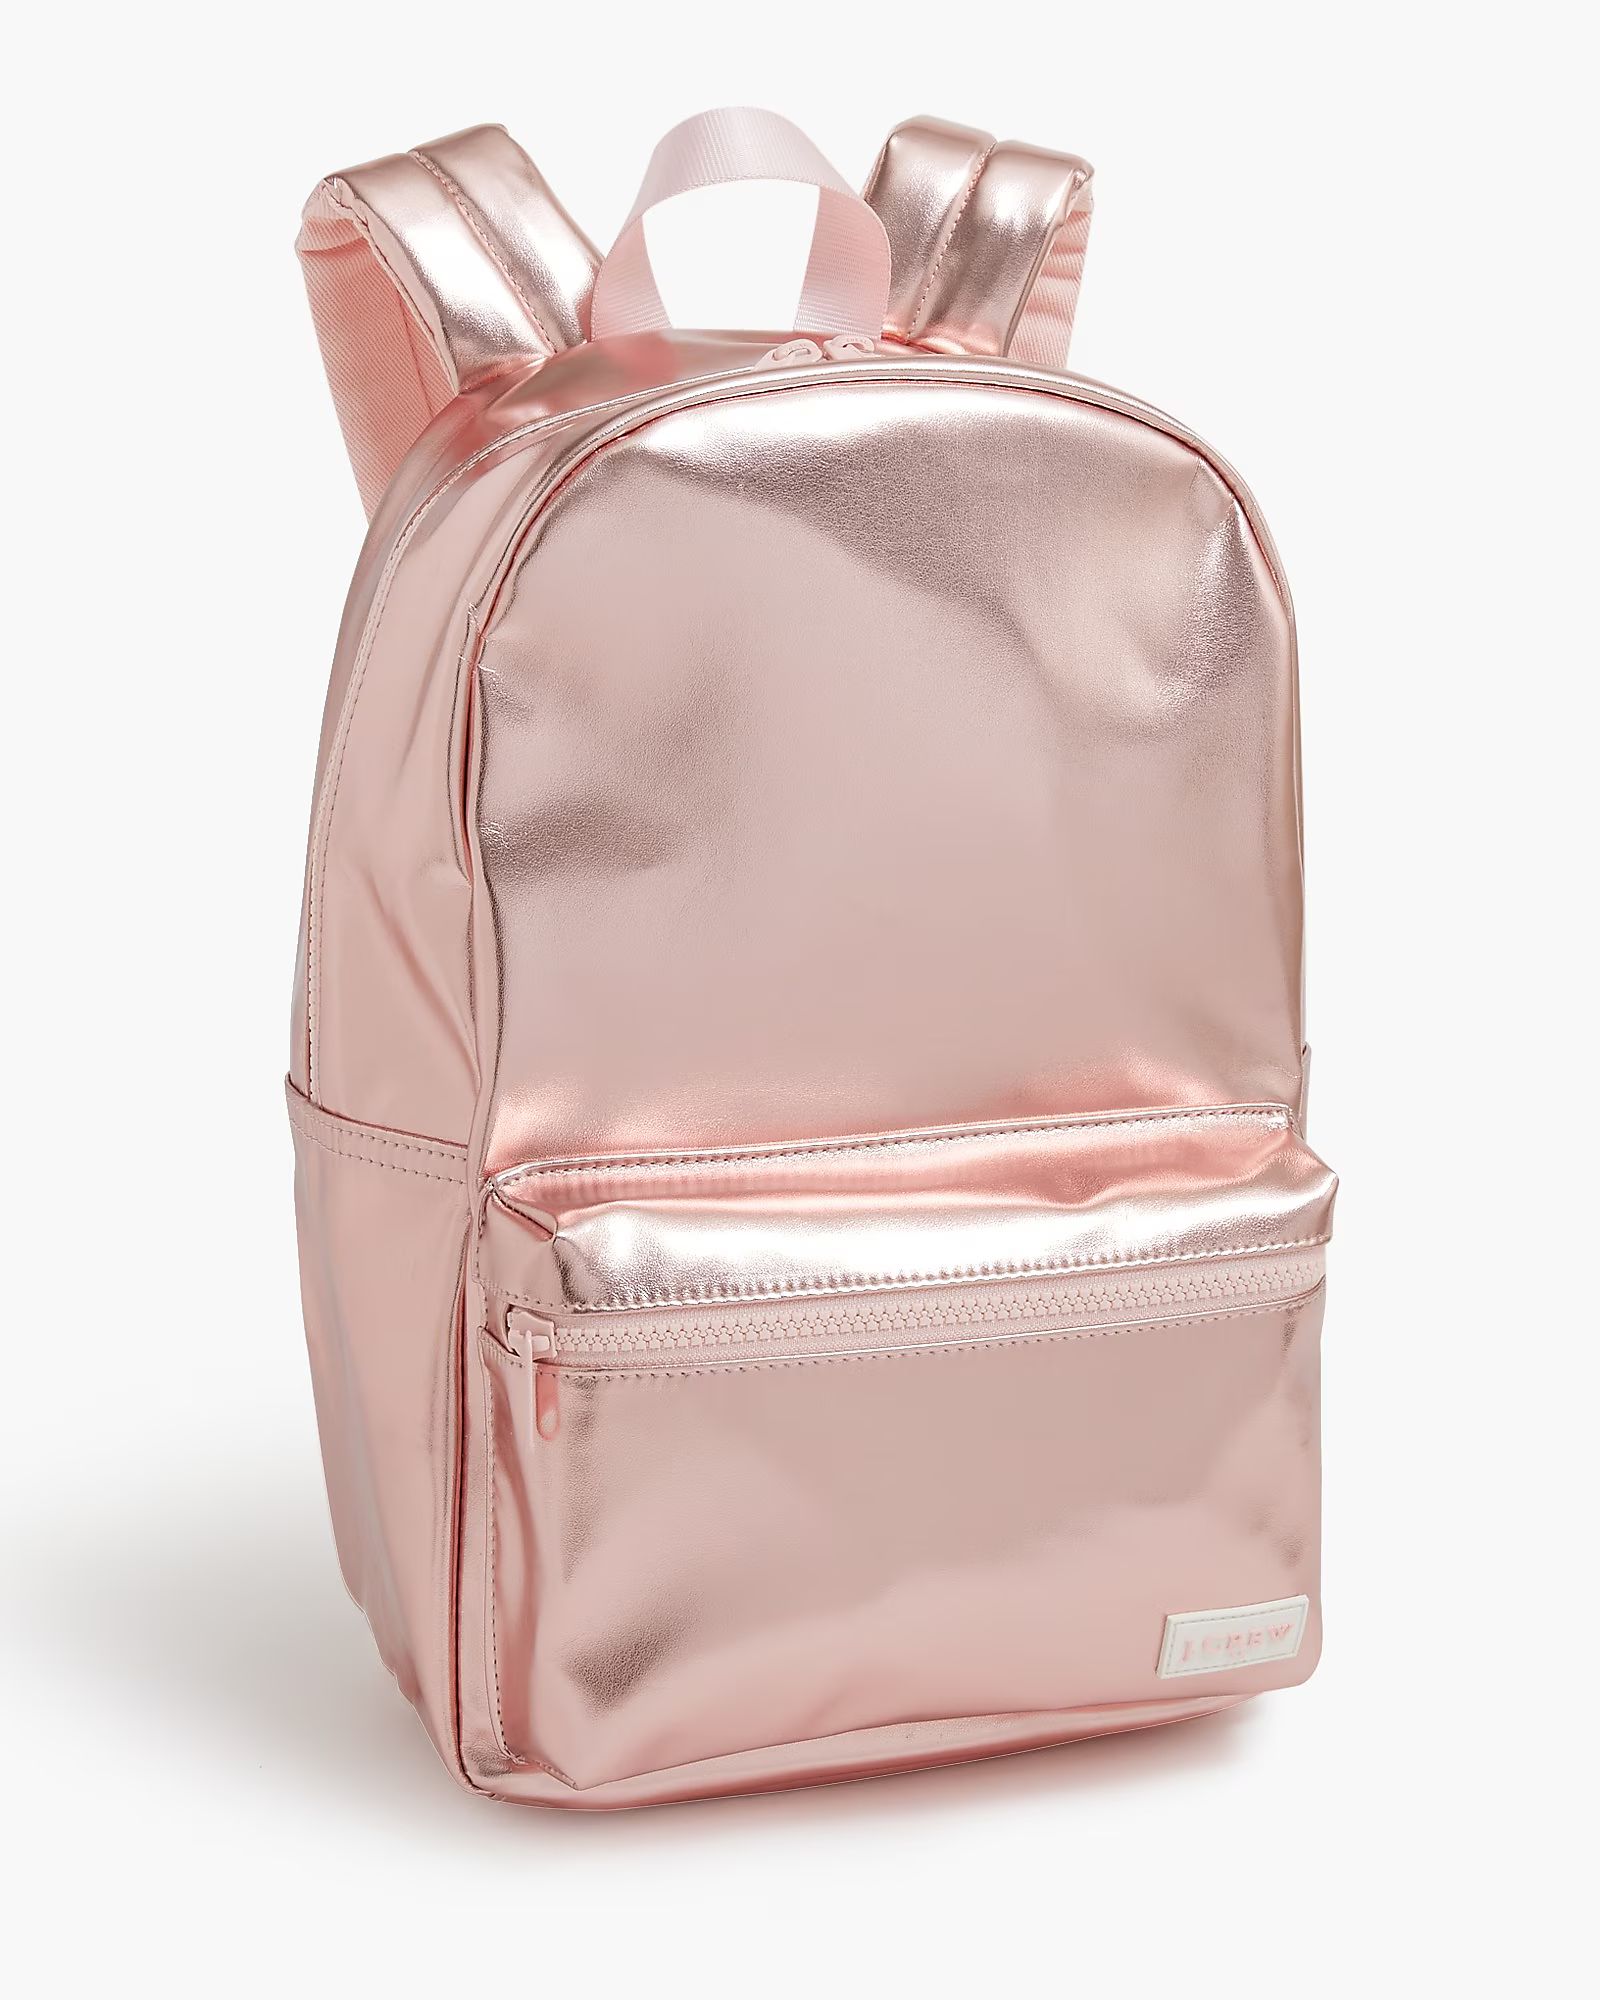 Kids' metallic backpack | J.Crew Factory